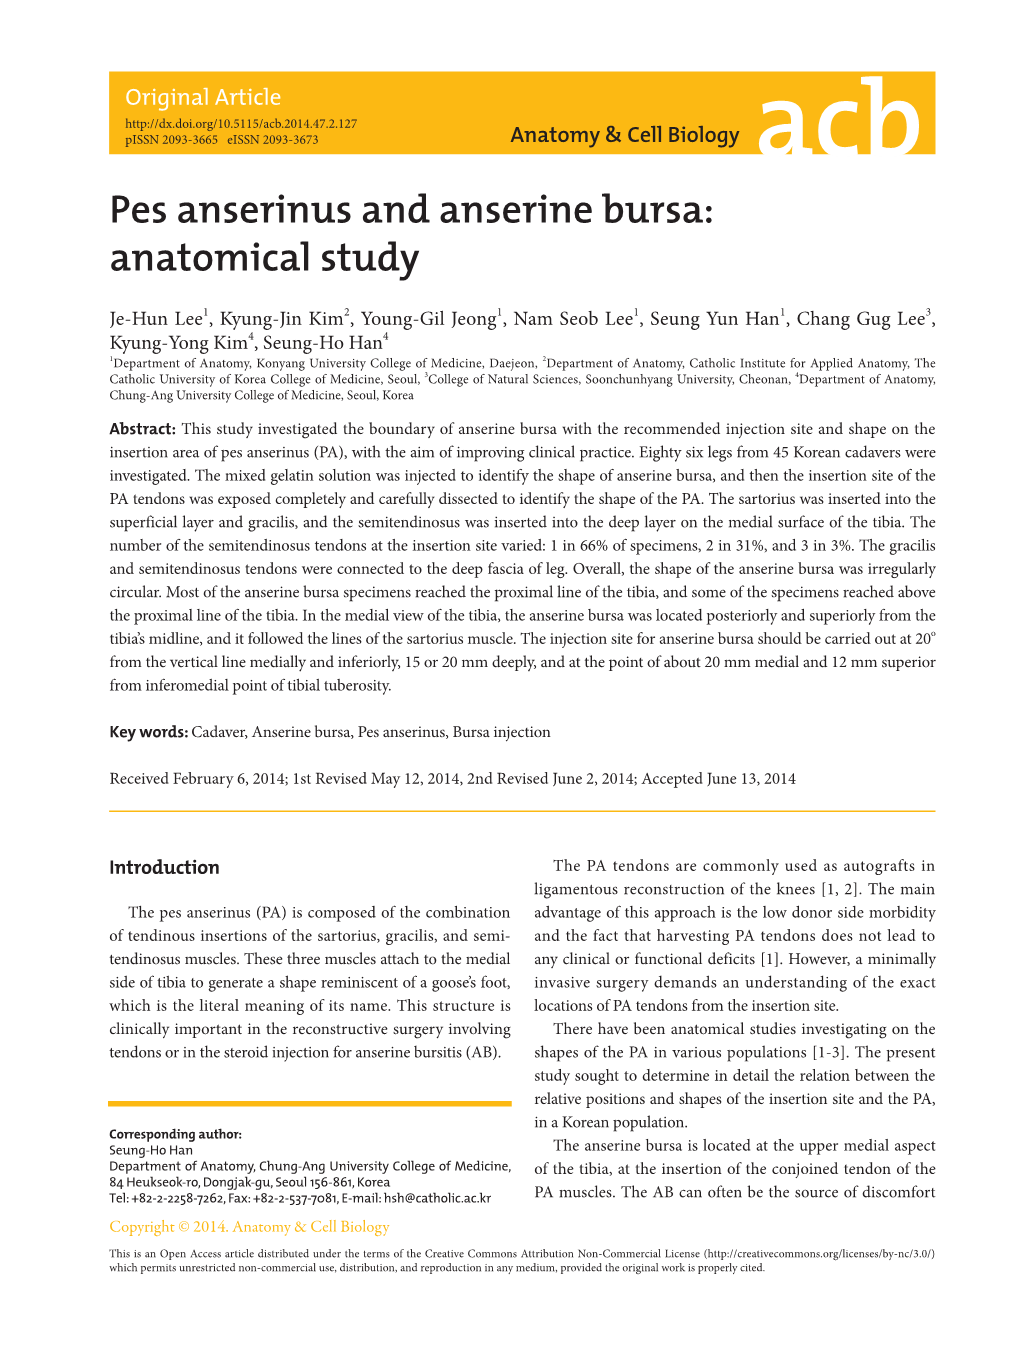 Pes Anserinus and Anserine Bursa: Anatomical Study